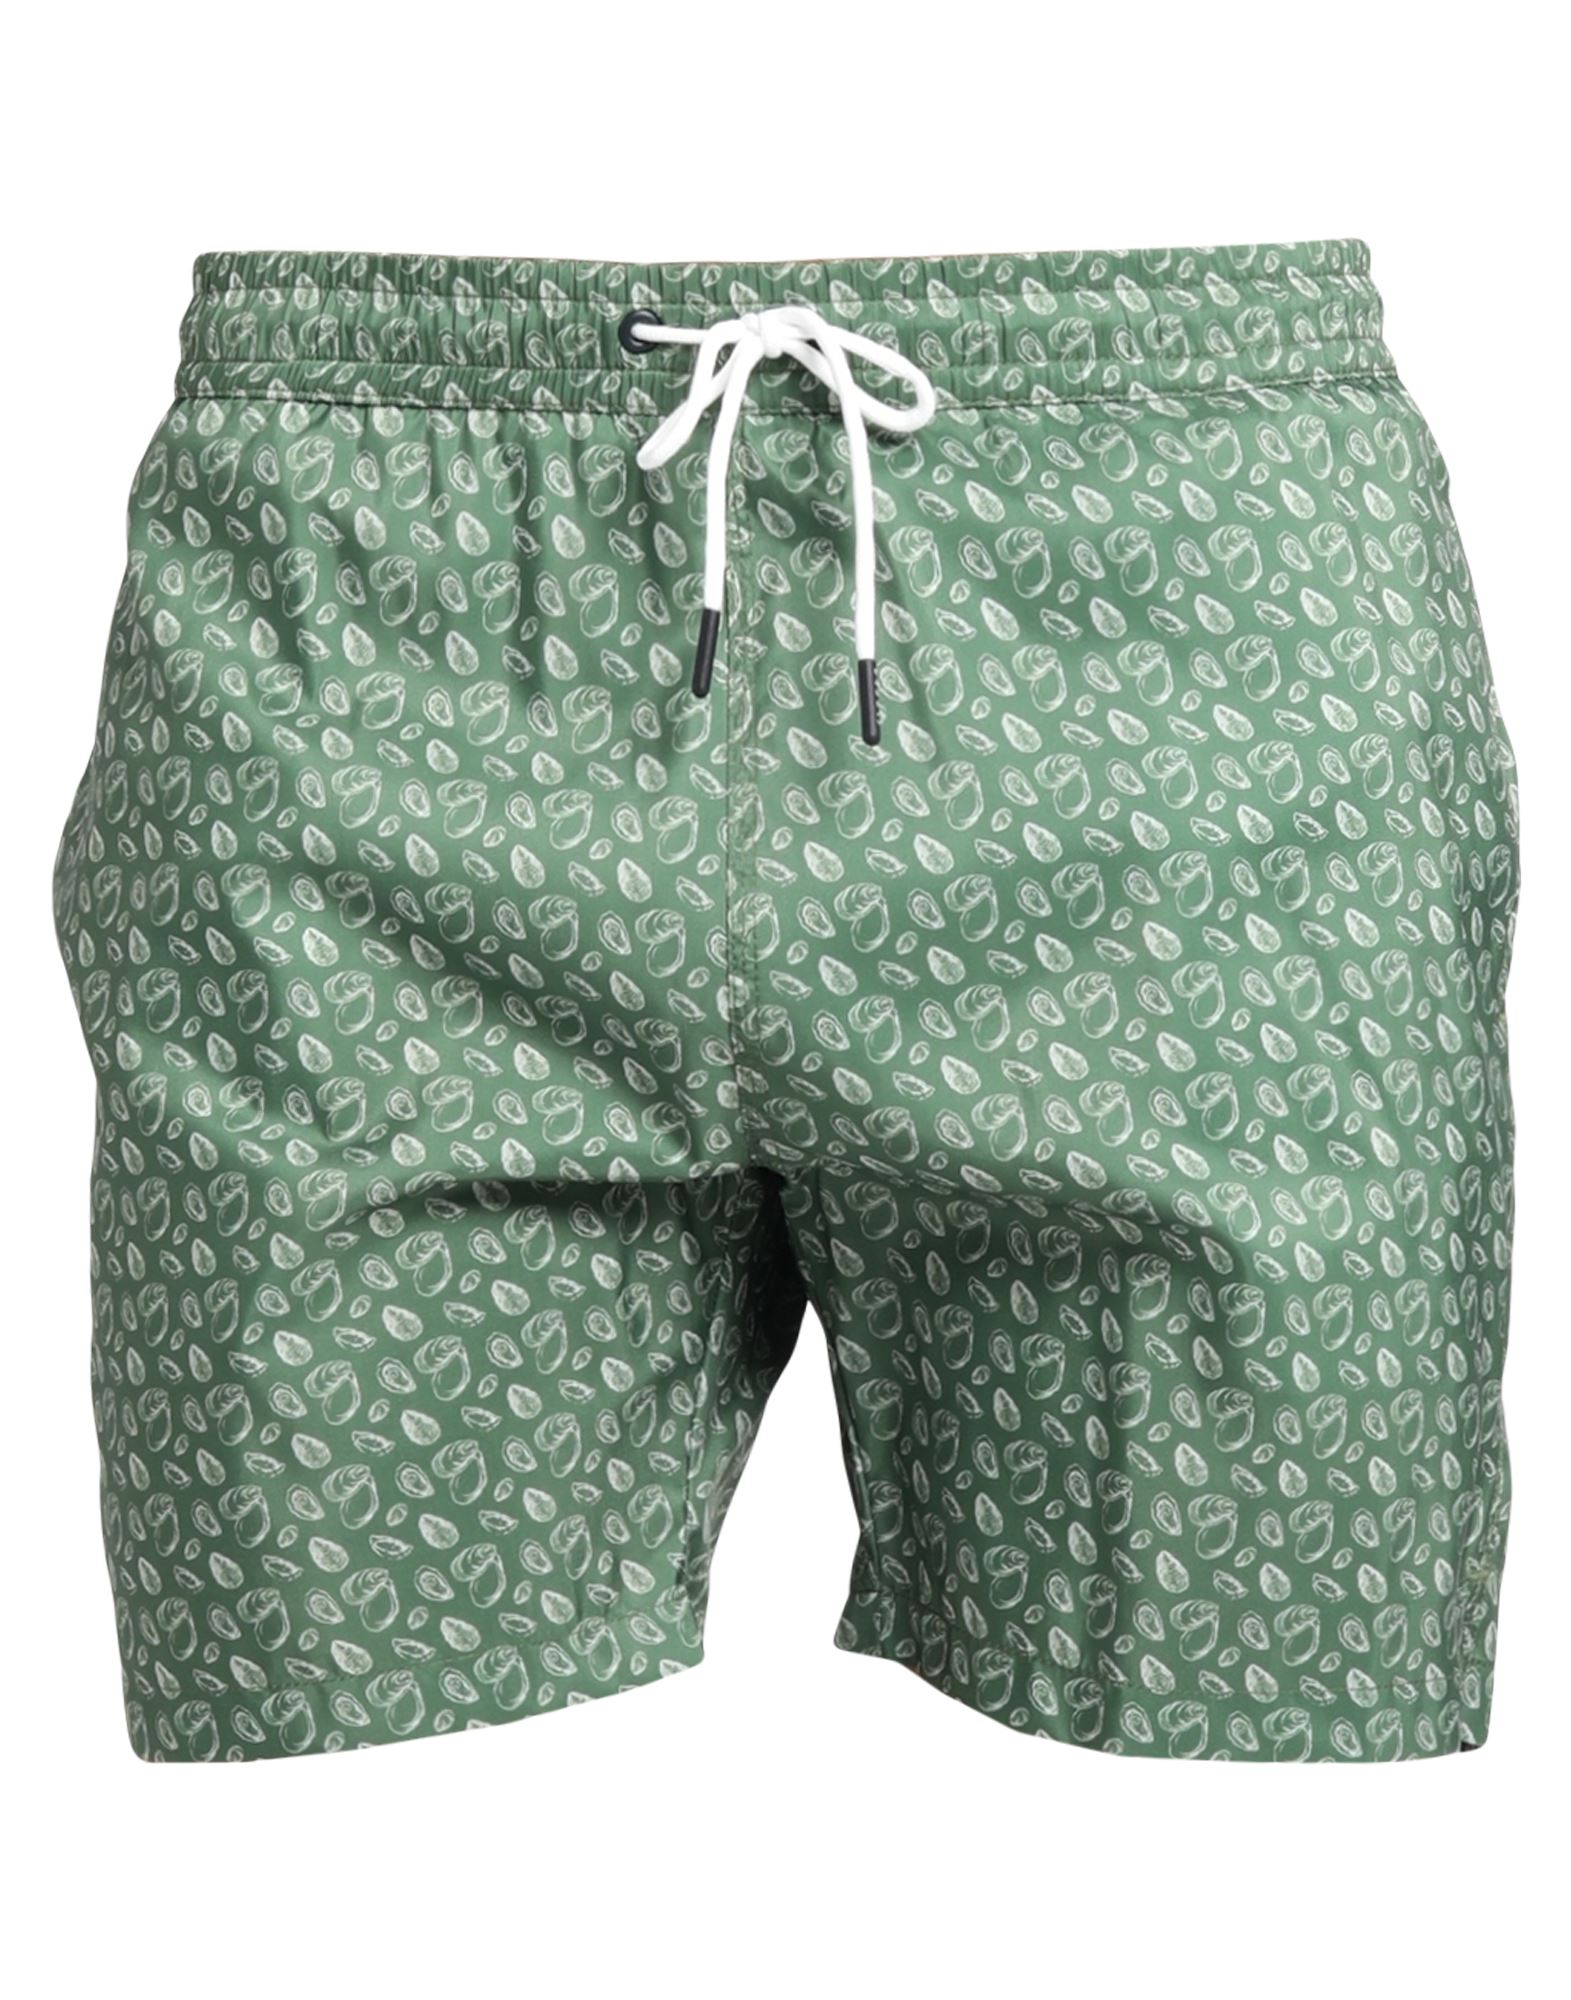 04651/a Trip In A Bag Man Swim Trunks Green Size Xl Polyester